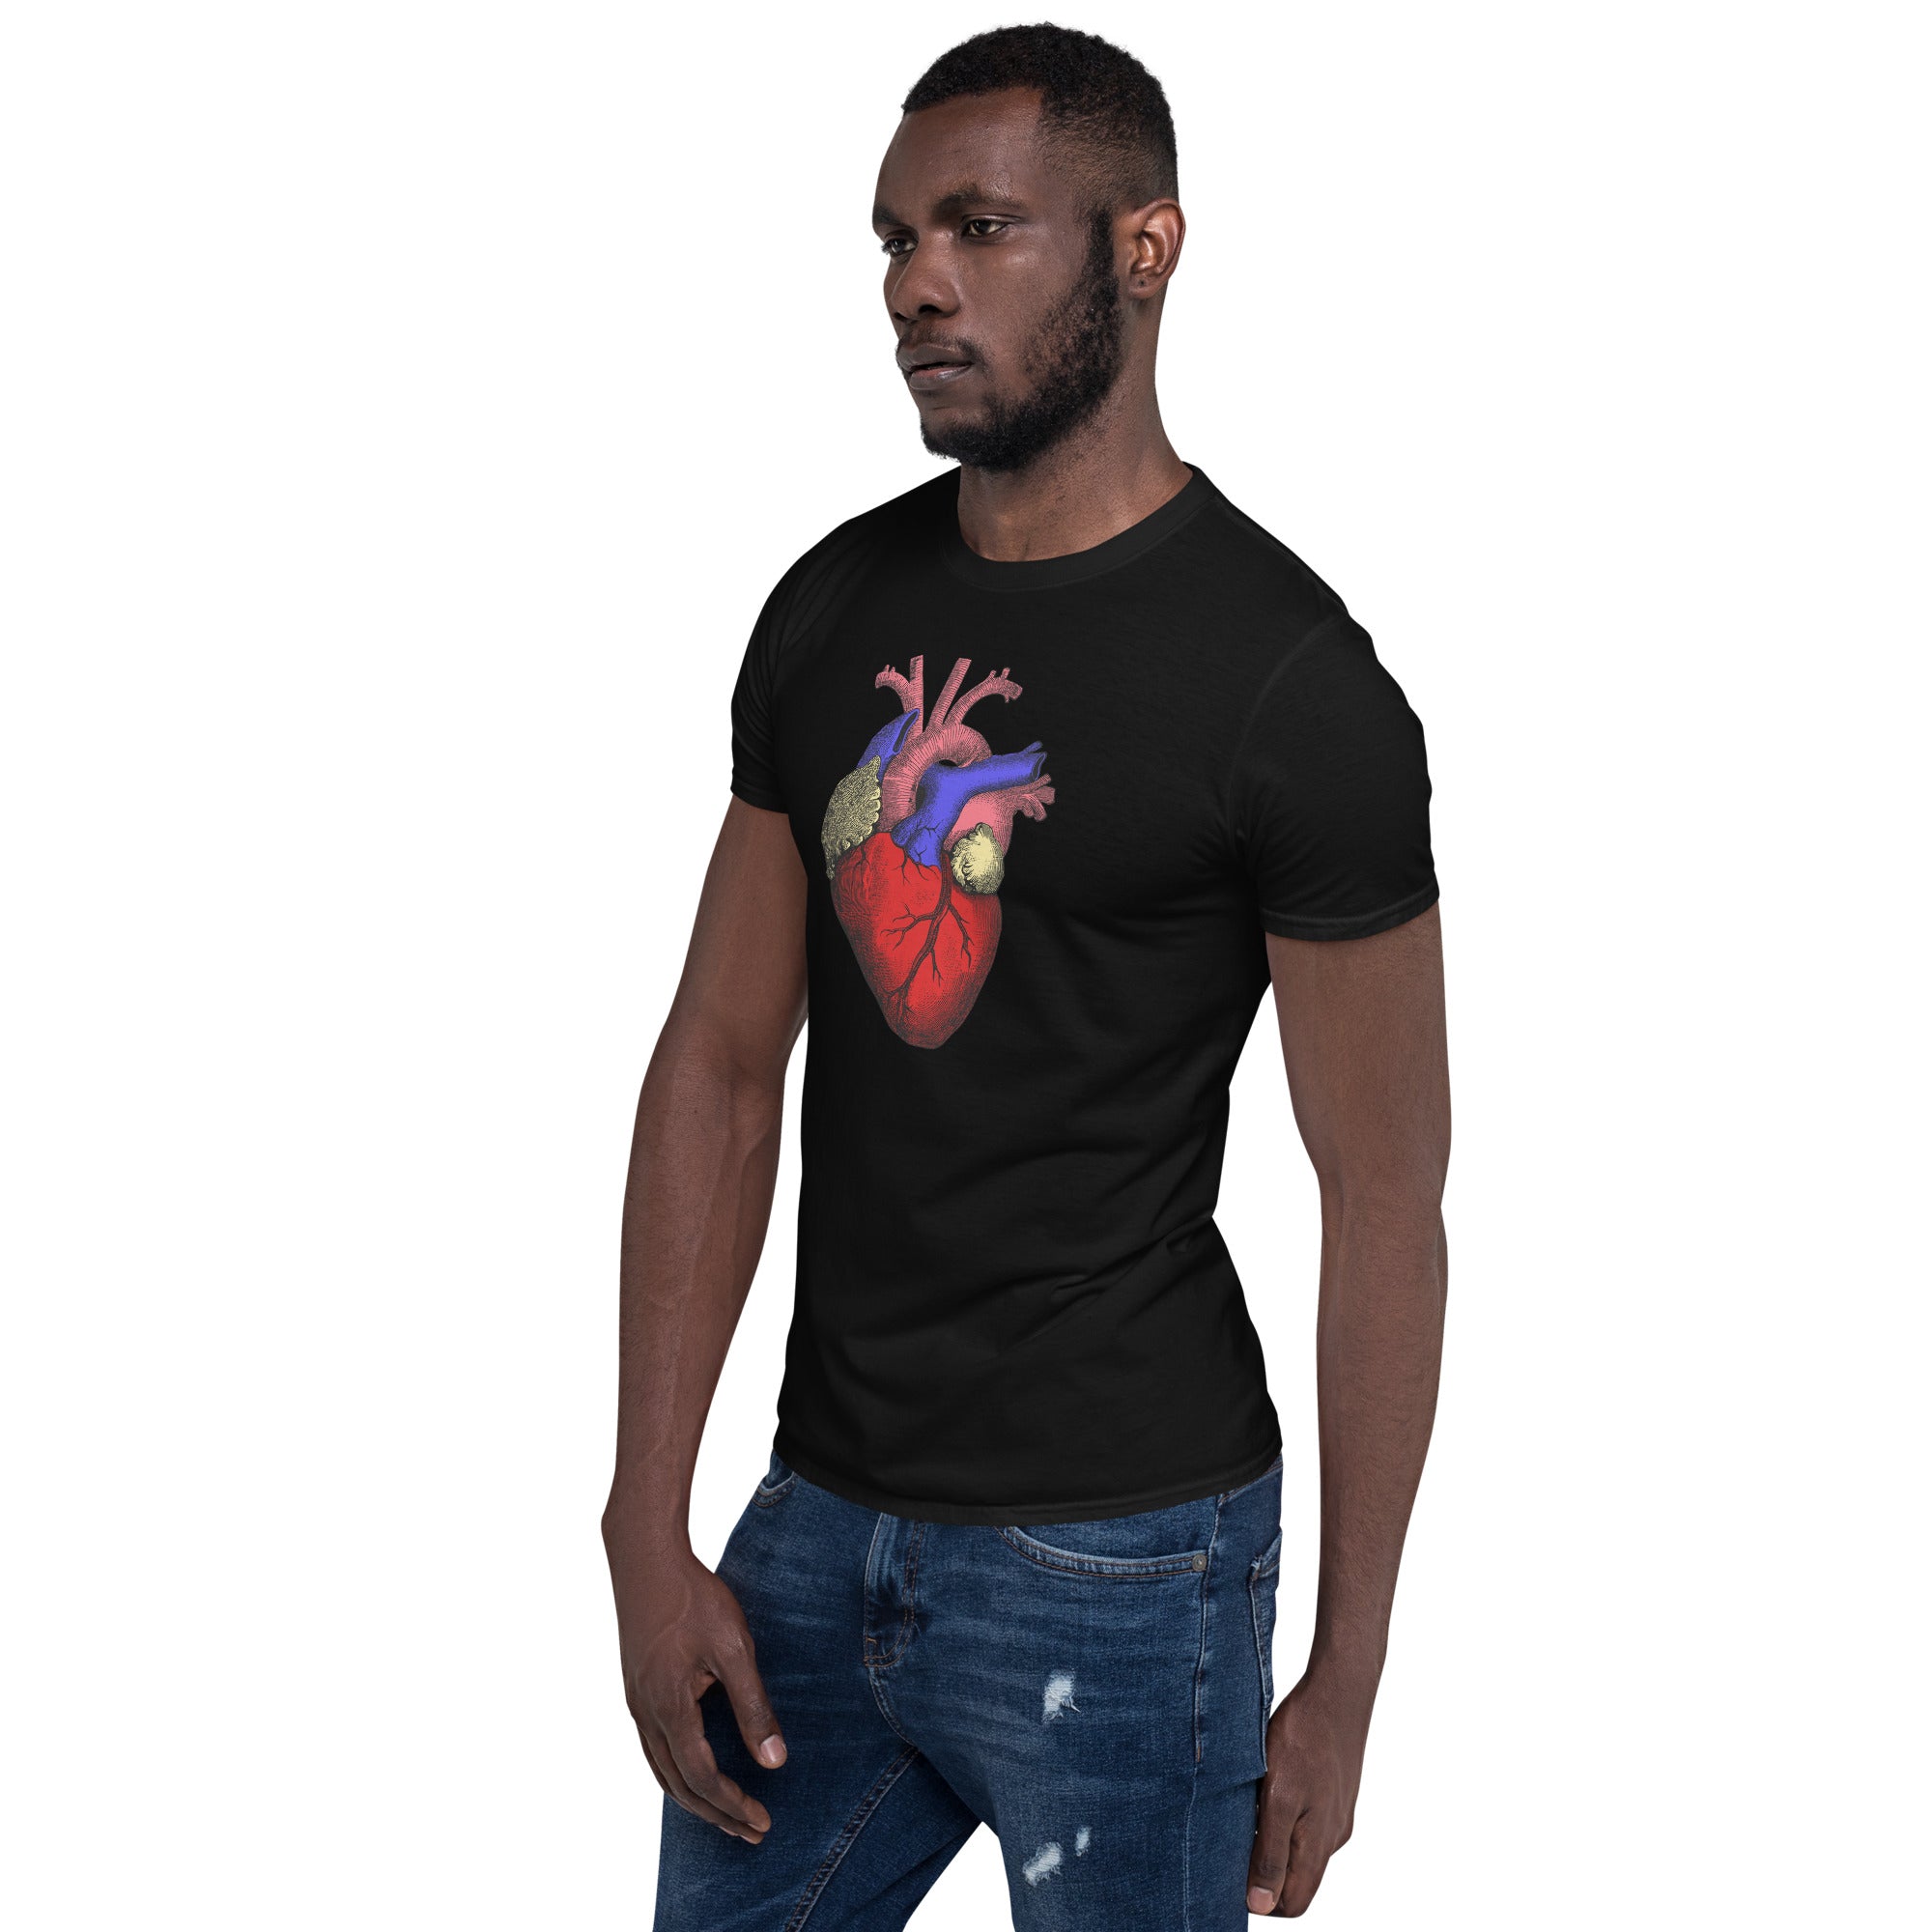 Anatomical Human Heart Medical Art Men's Short Sleeve T-Shirt Full Color - Edge of Life Designs